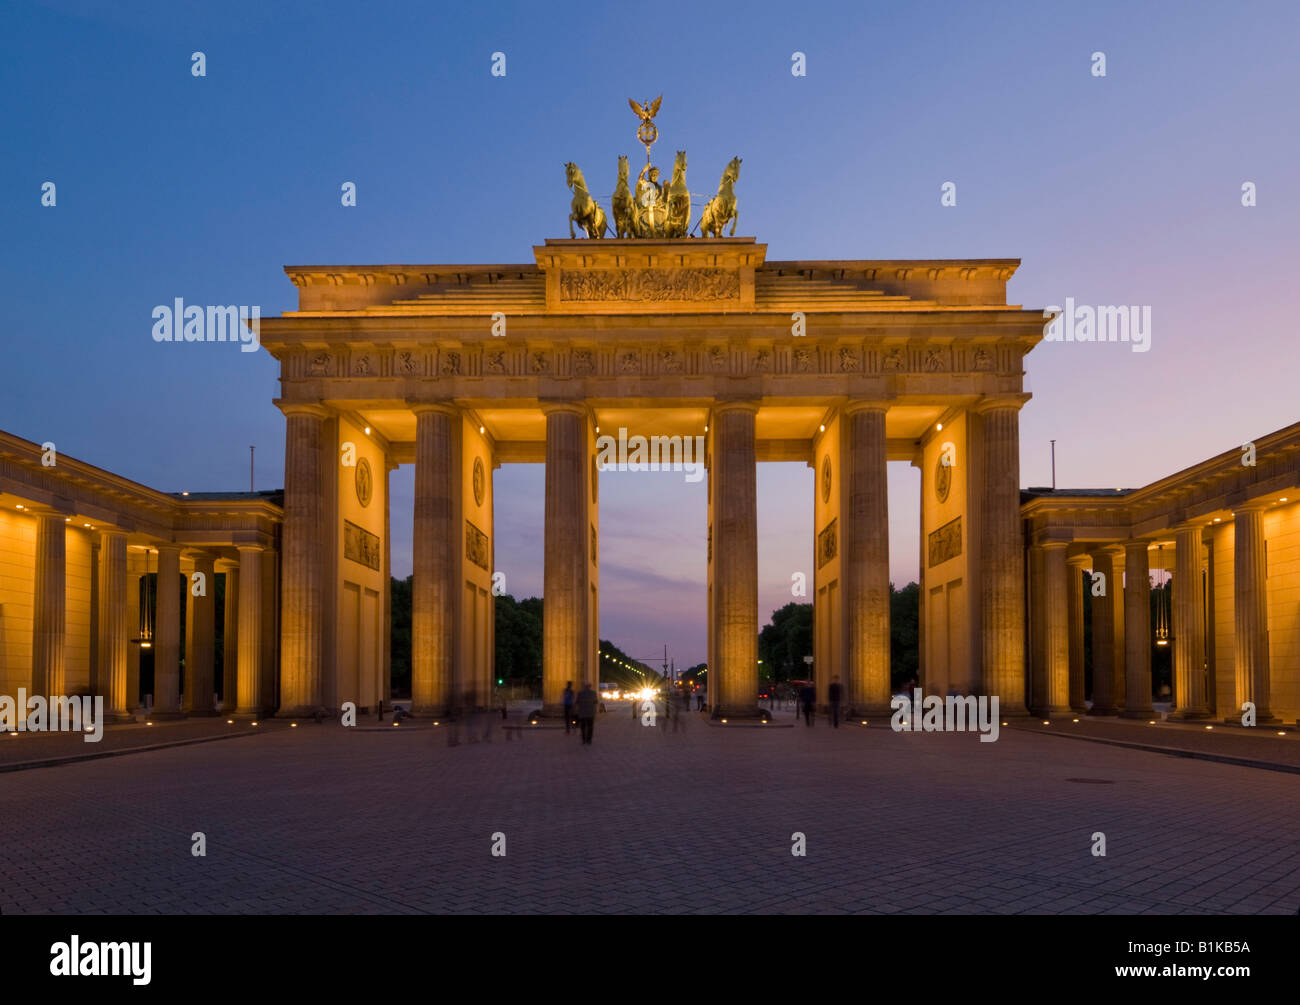 The Brandenburg Gate with the Quadriga winged victory statue on top illuminated night Pariser Platz Berlin city centre Germany Stock Photo